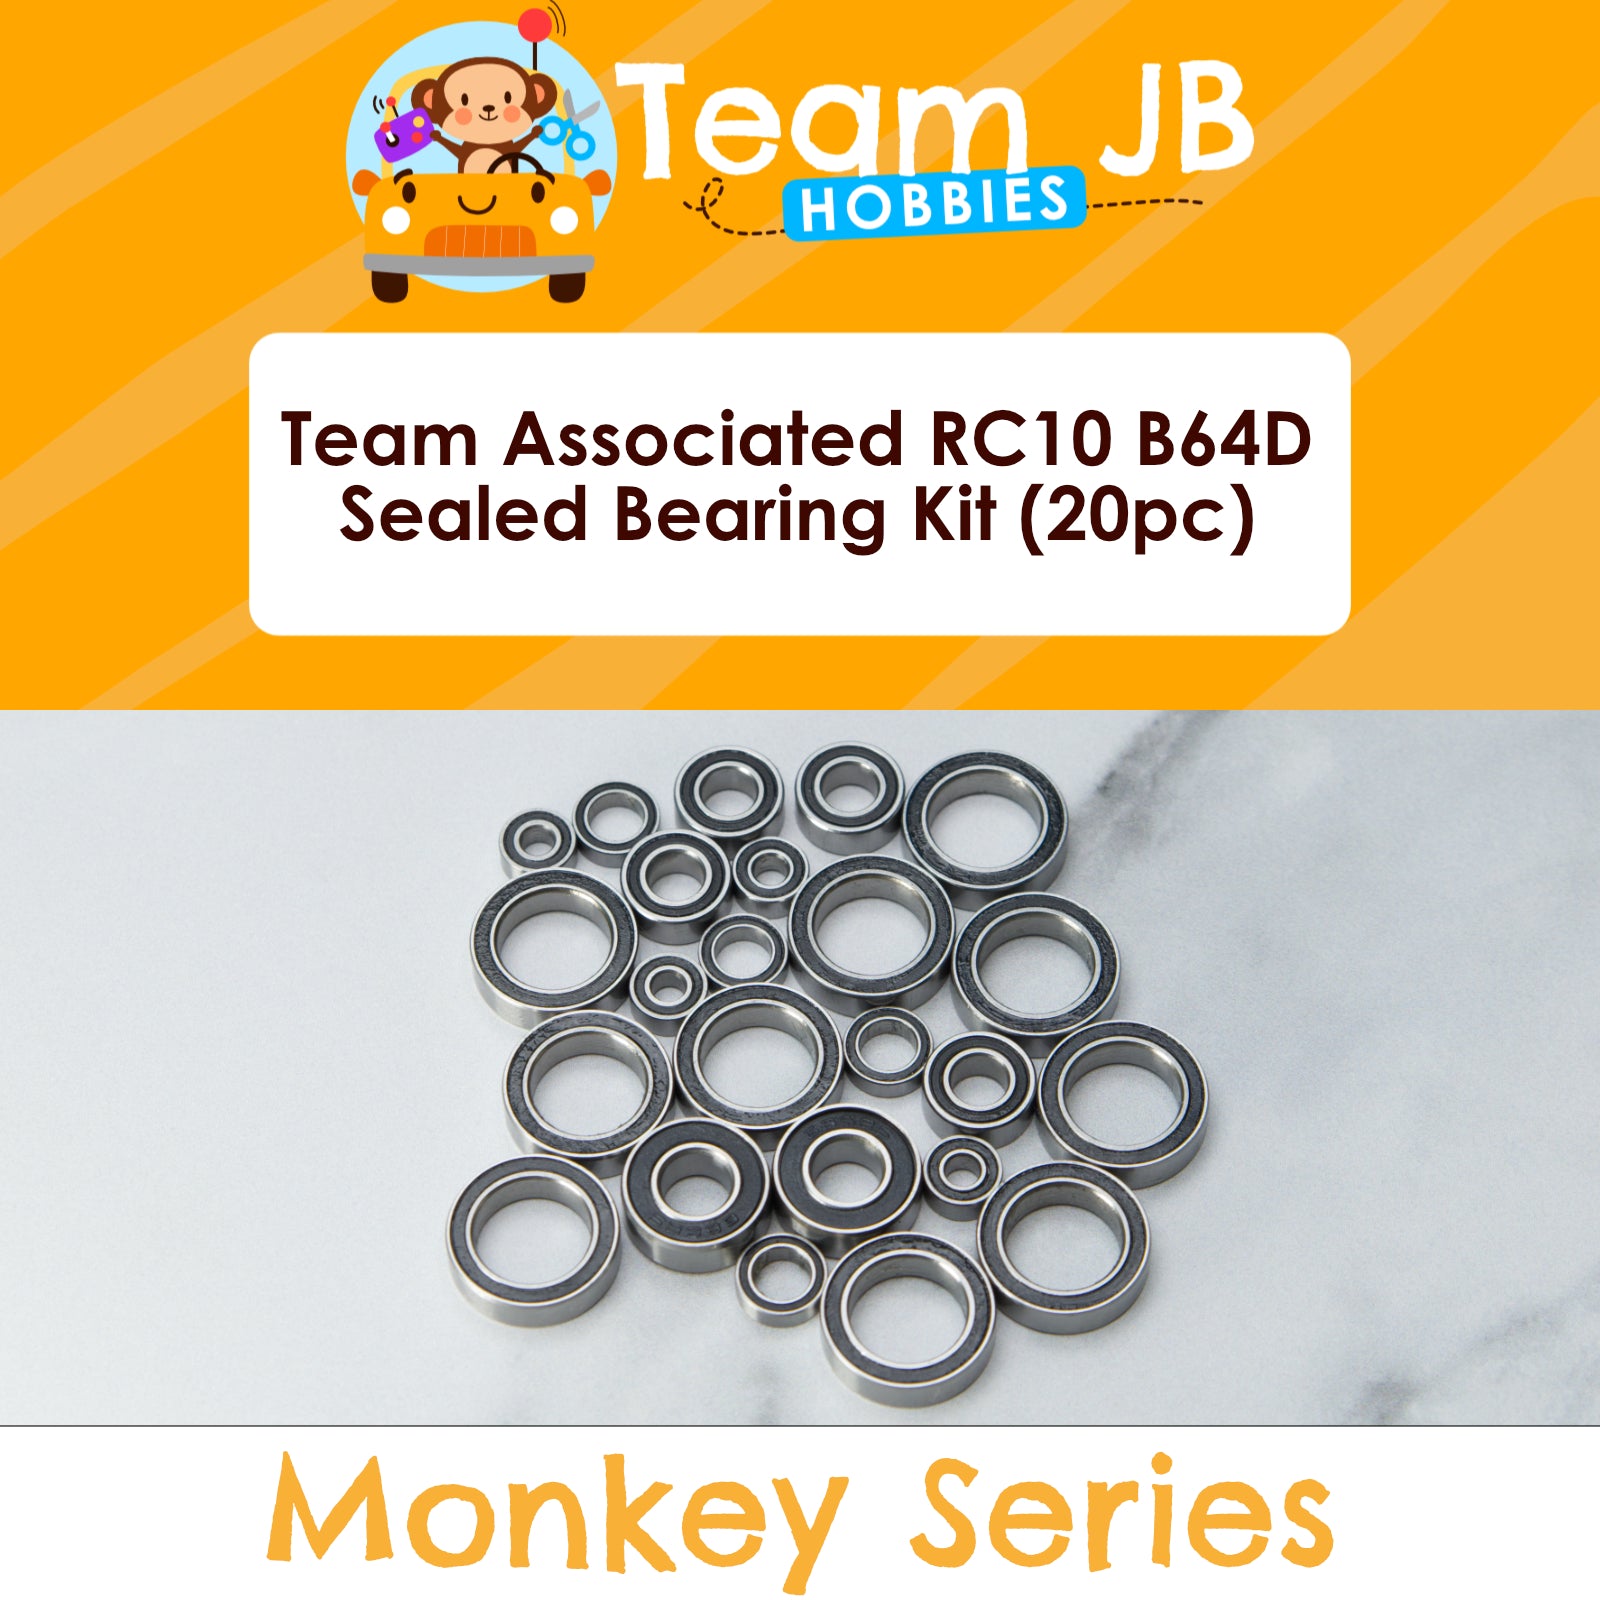 Team Associated RC10 B64D - Sealed Bearing Kit